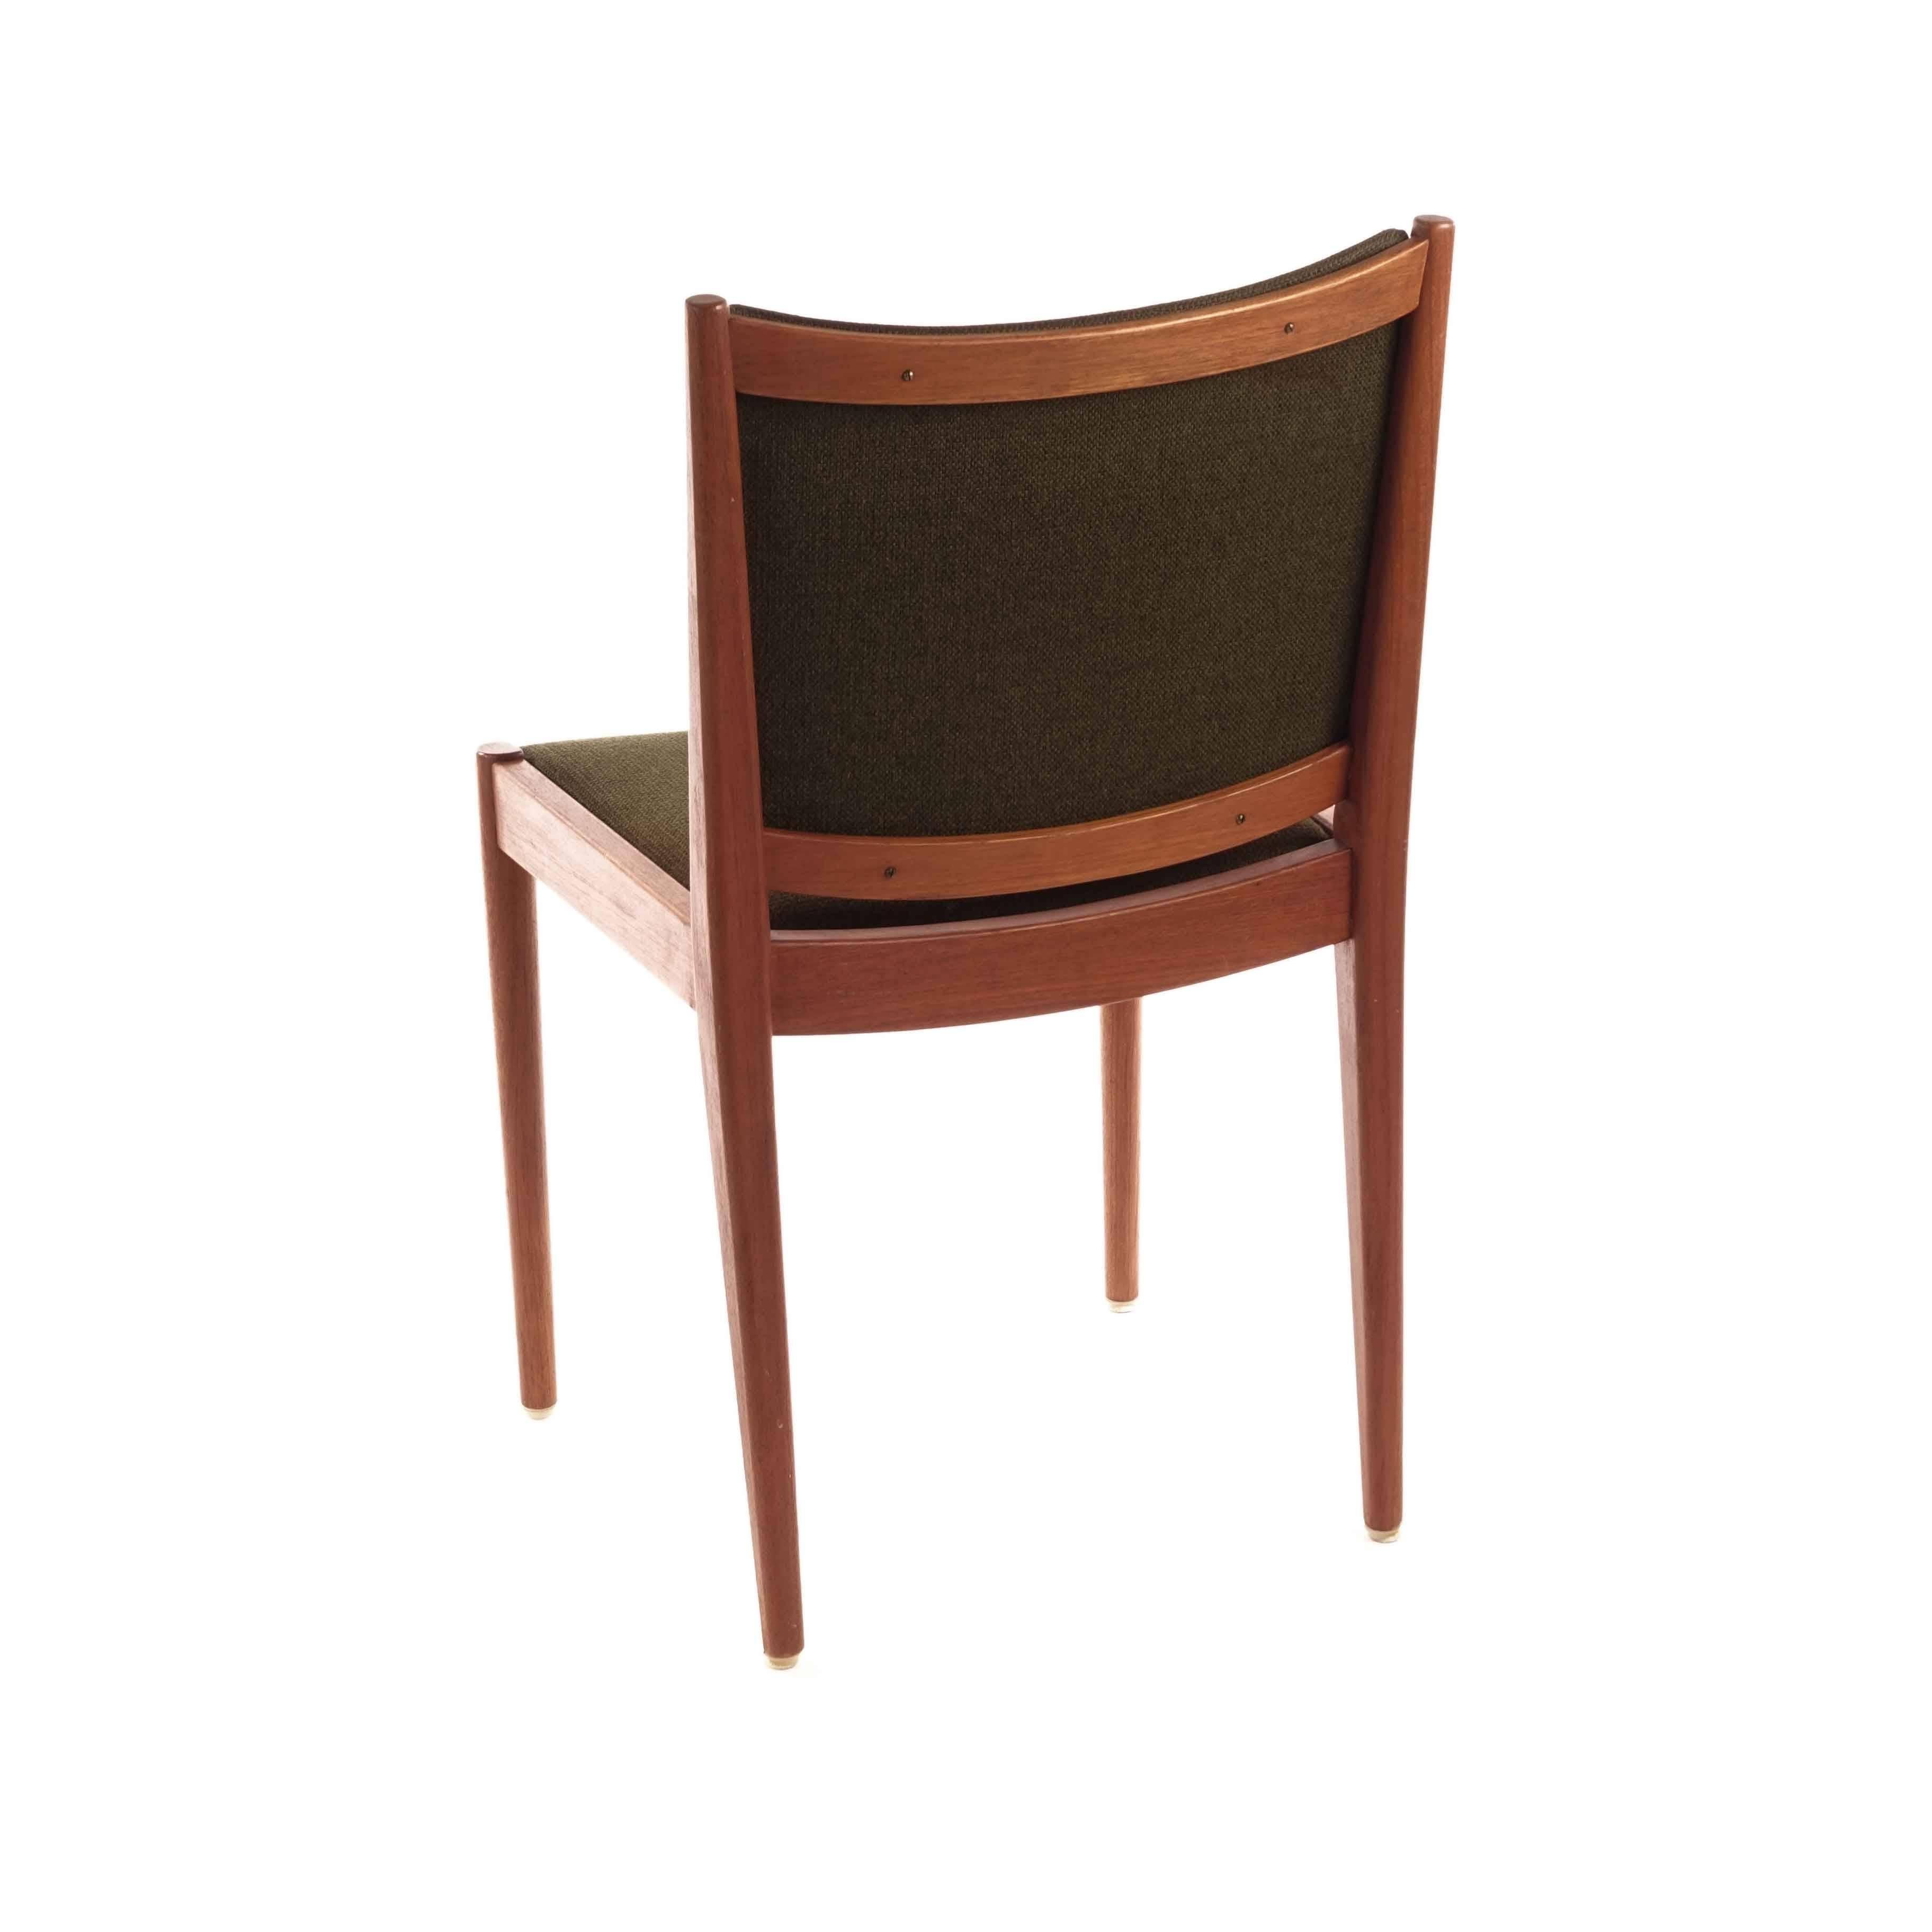 Scandinavian Modern Swedish Retro Chairs from 1950s For Sale